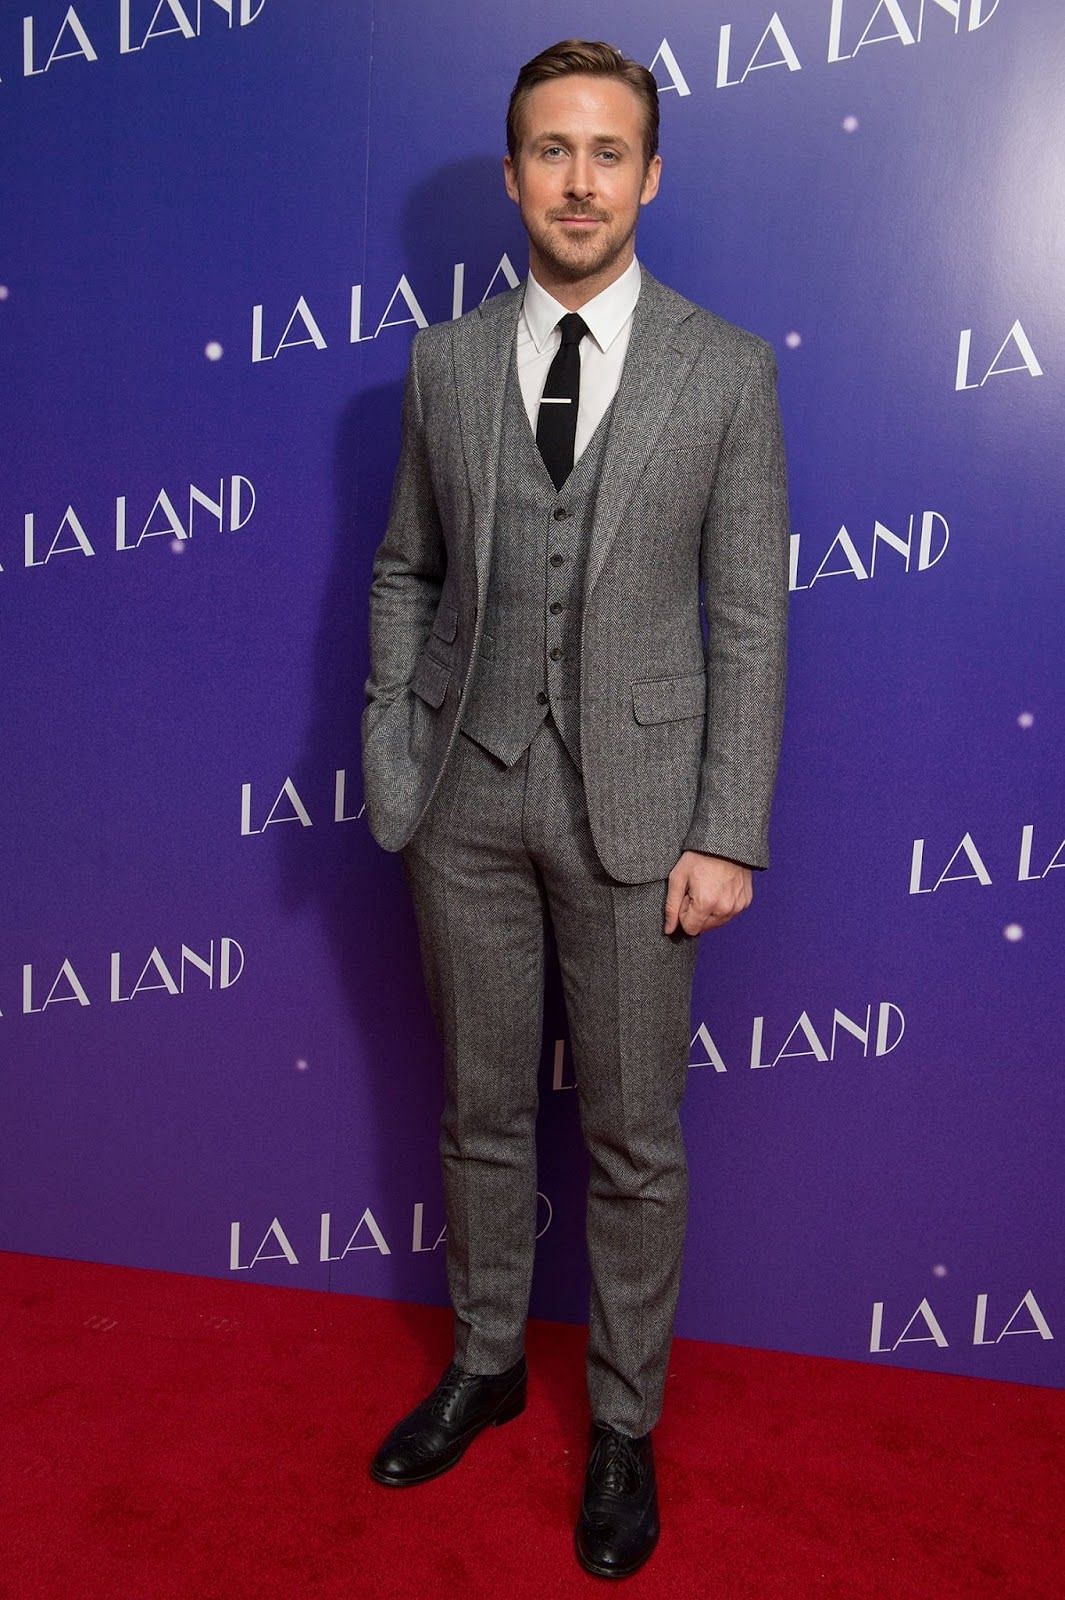 Has Ryan Gosling won any awards for &quot;La La Land&quot;?